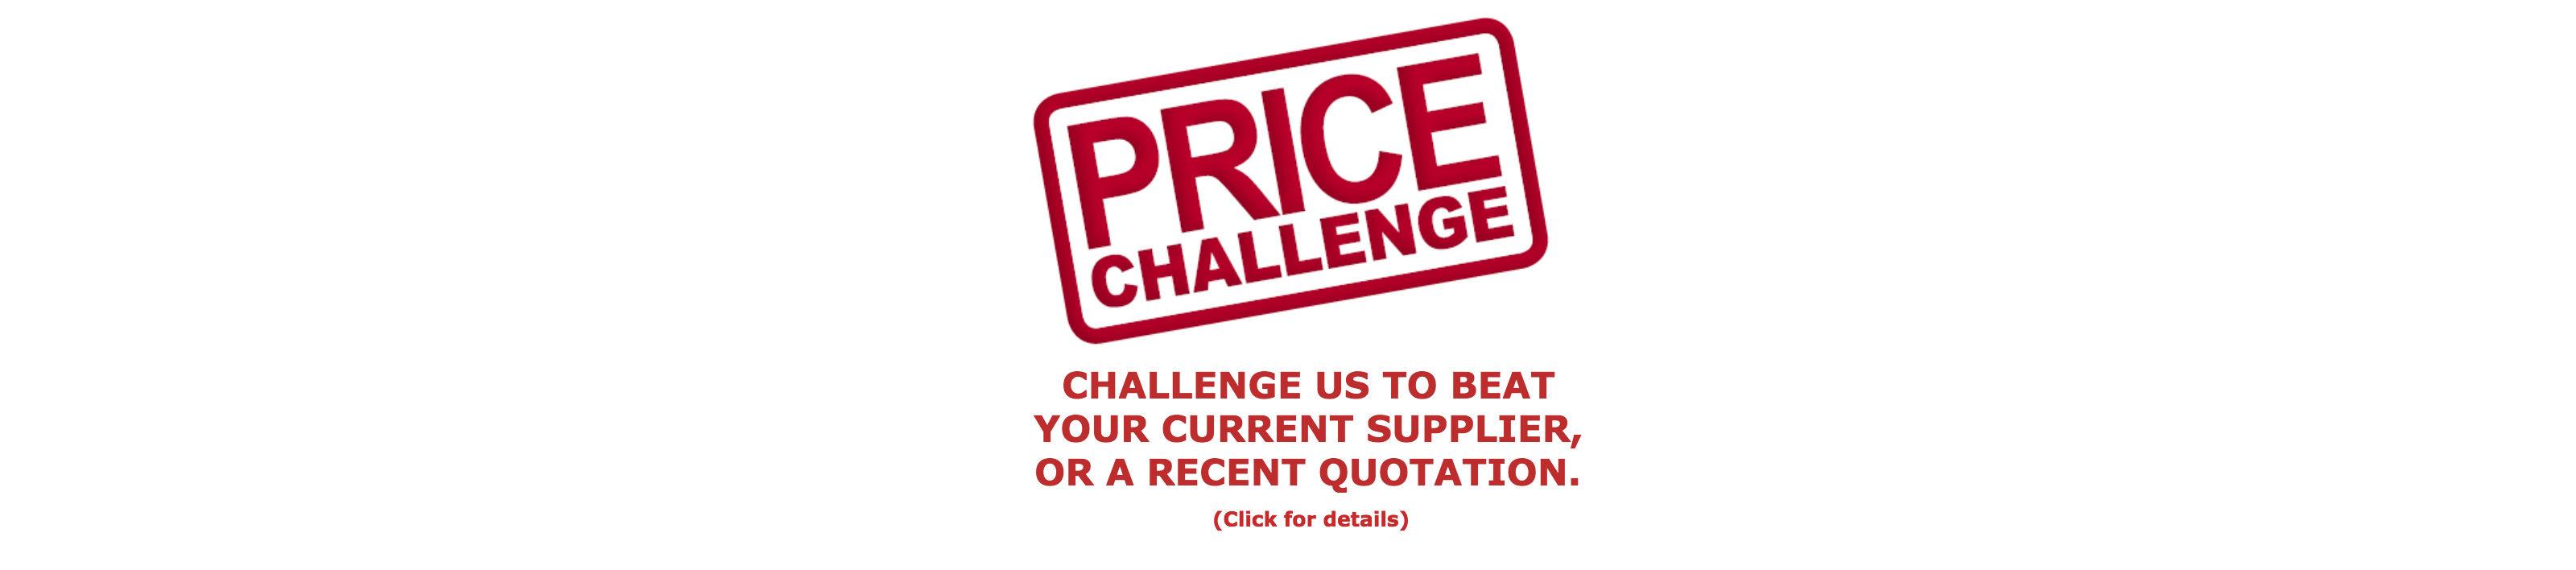 Price Challenge